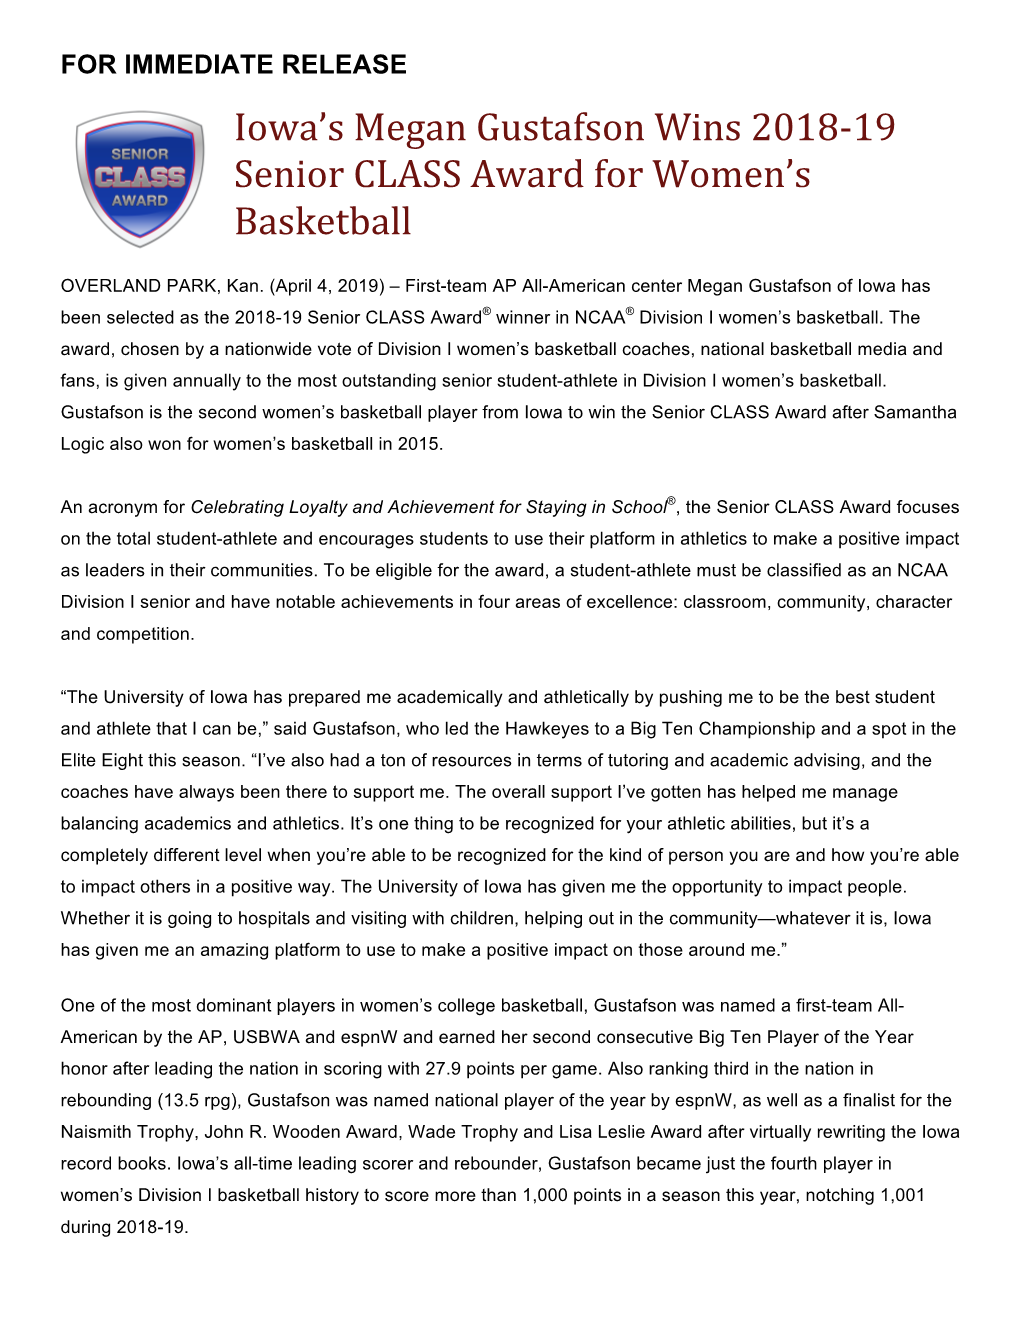 Iowa's Megan Gustafson Wins 2018-19 Senior CLASS Award For